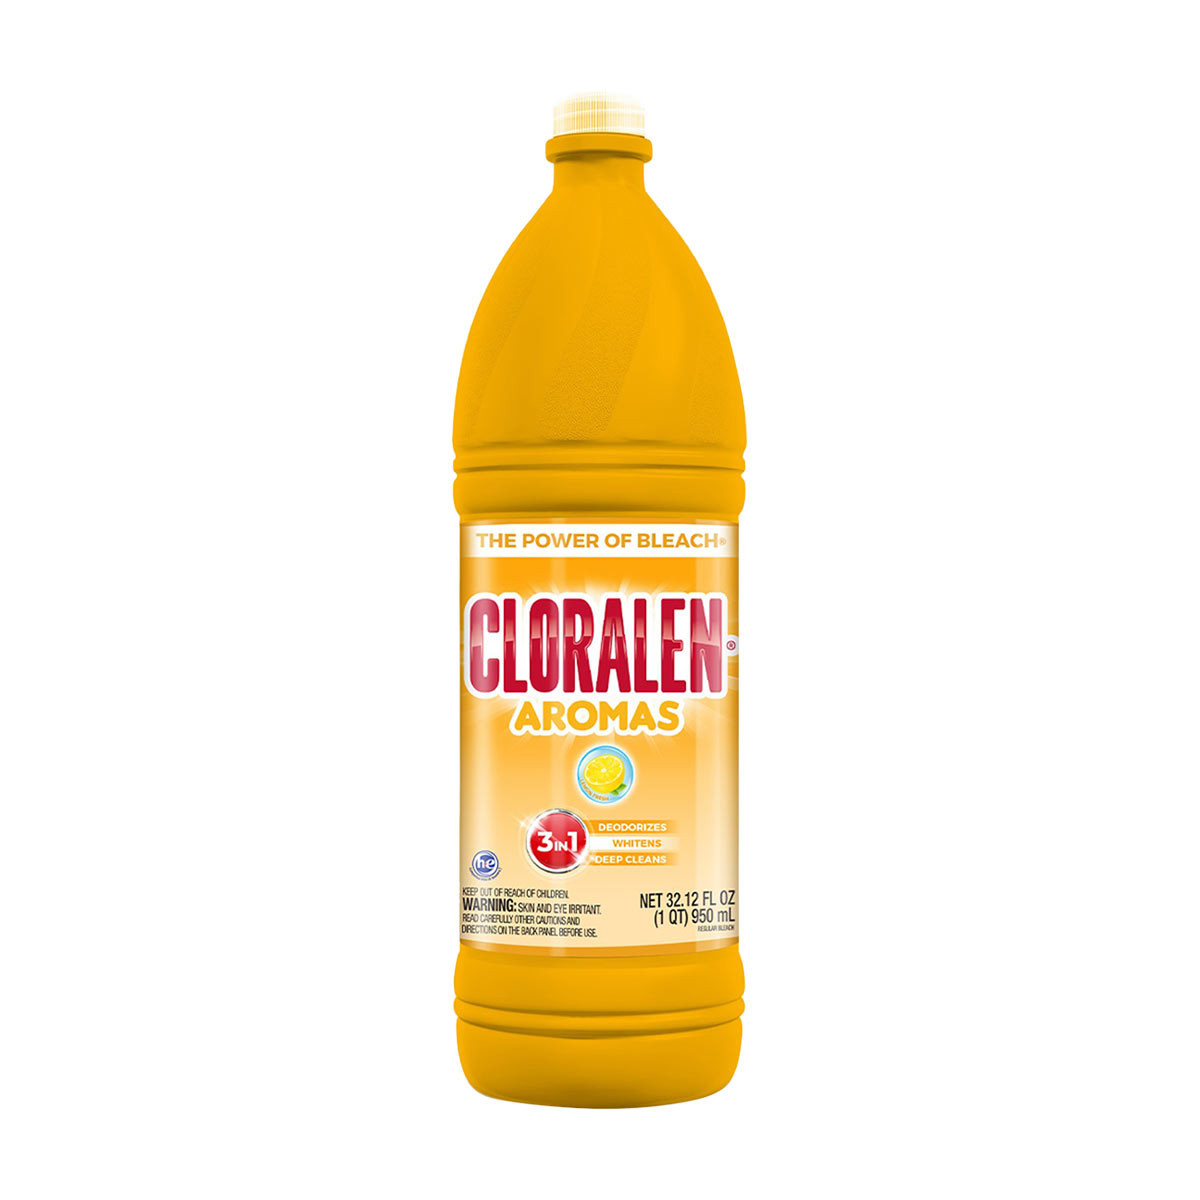 Cloralen Aromas Liquid Lemon Bleach, 32.12 fl oz